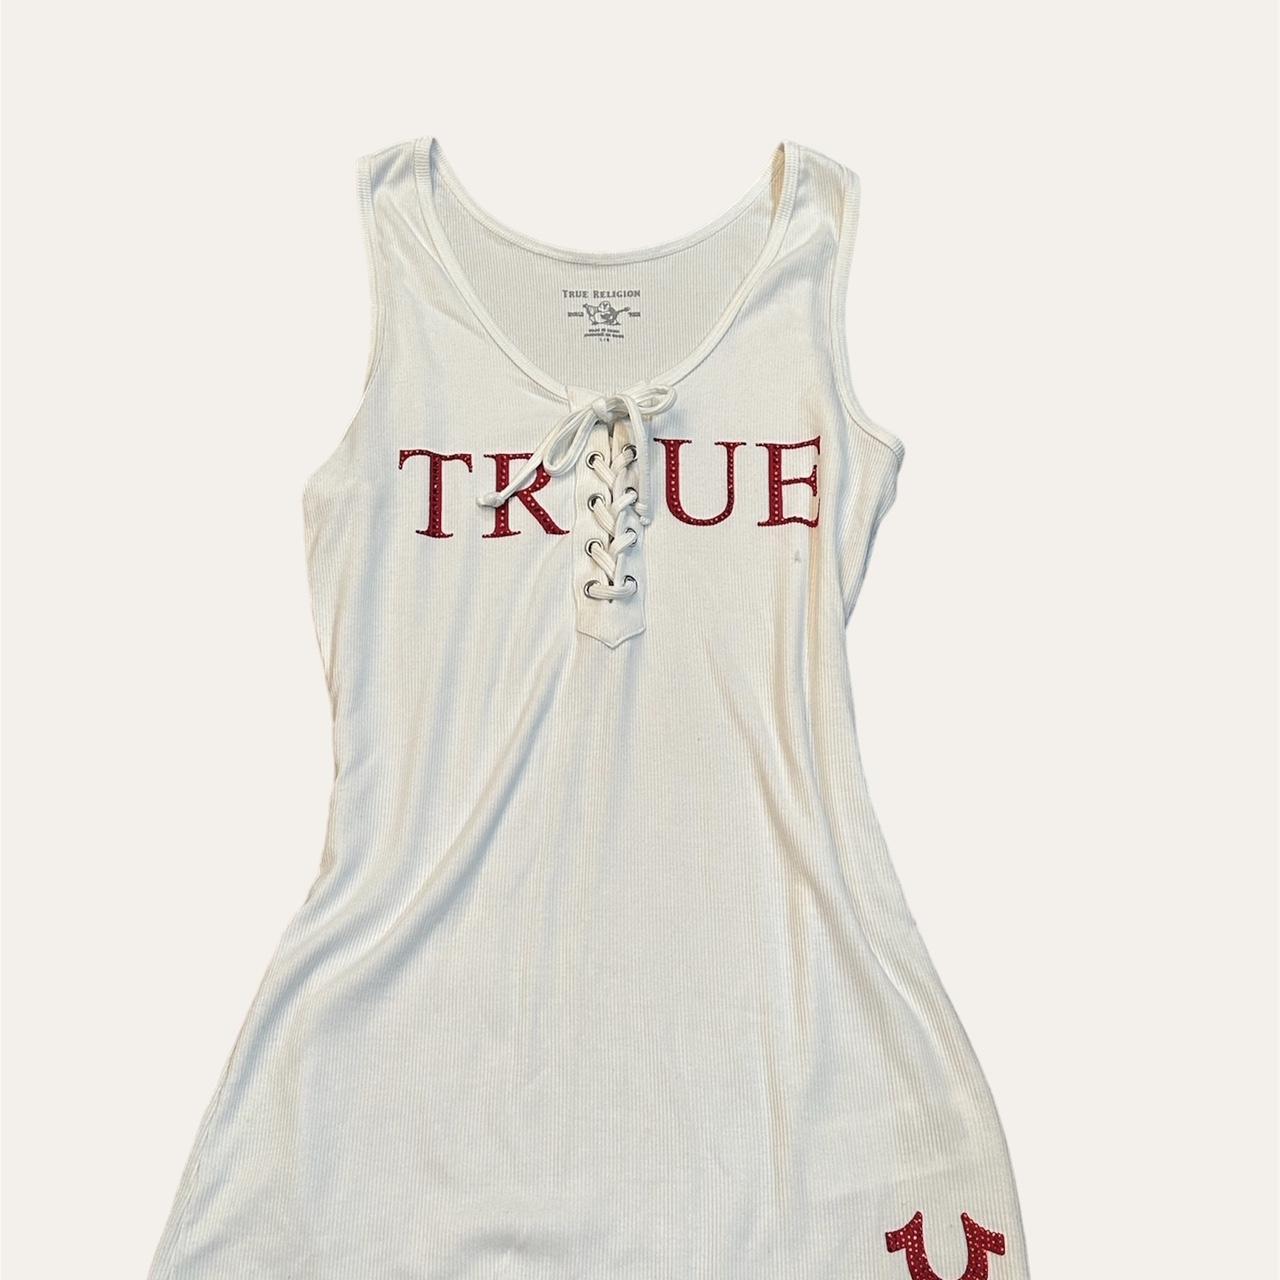 True Religion Women's White and Red Vest | Depop